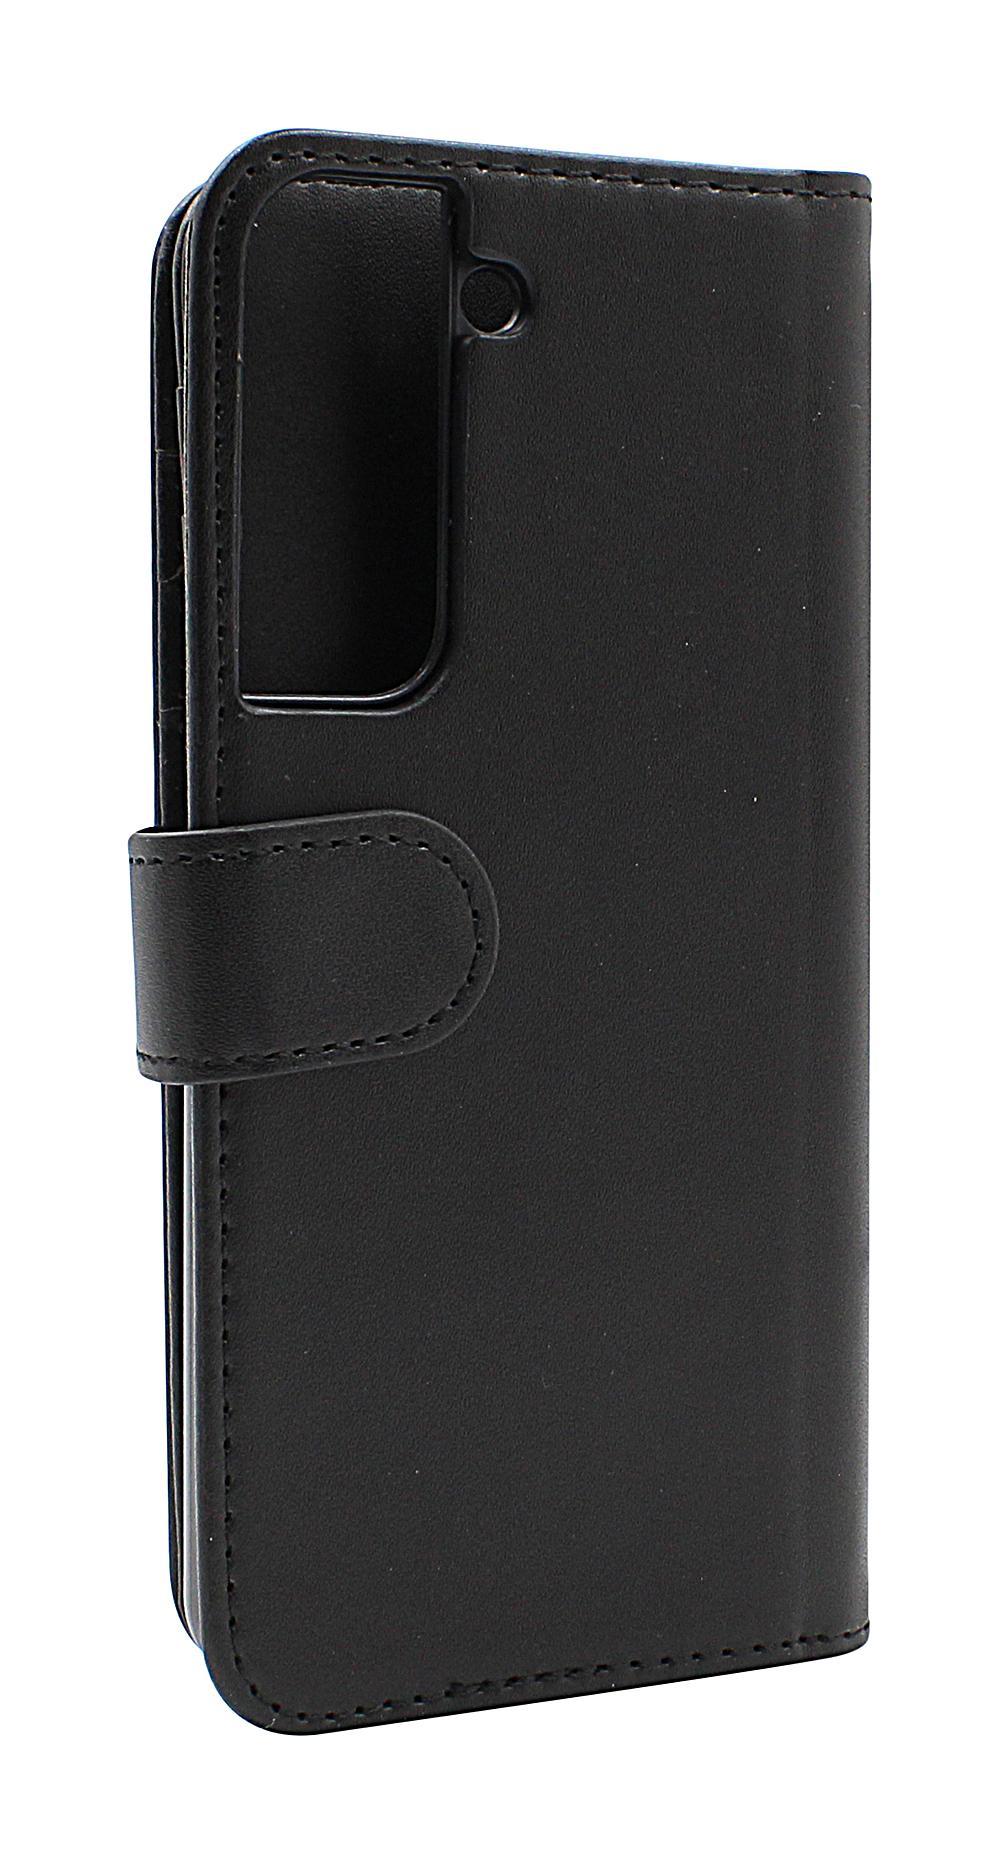 CoverInSkimblocker XL Wallet Samsung Galaxy S22 5G